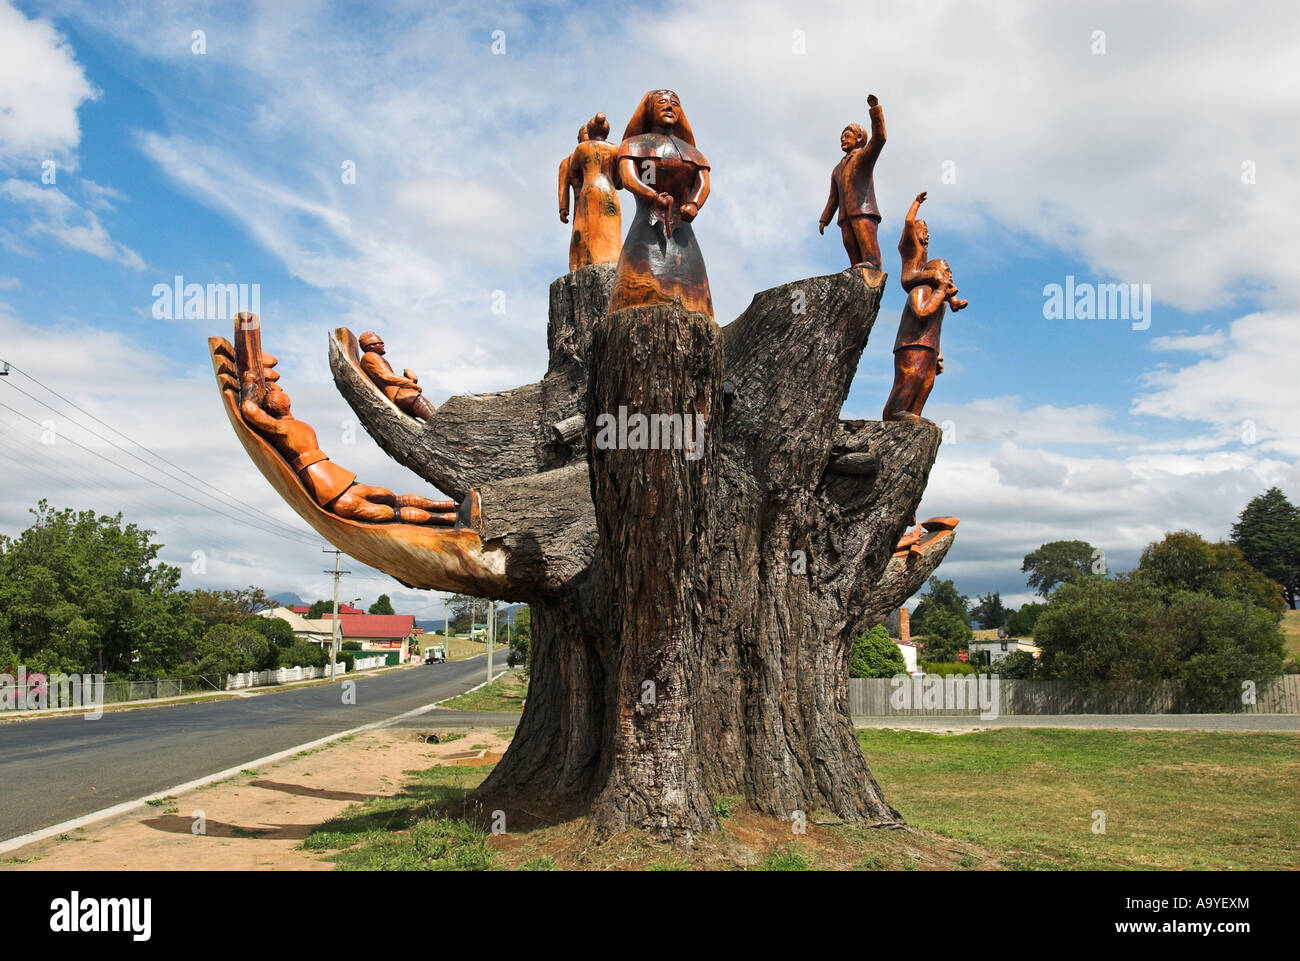 Wood sculpture in Leggerwood, Northern Tasmania, Australia Stock Photo